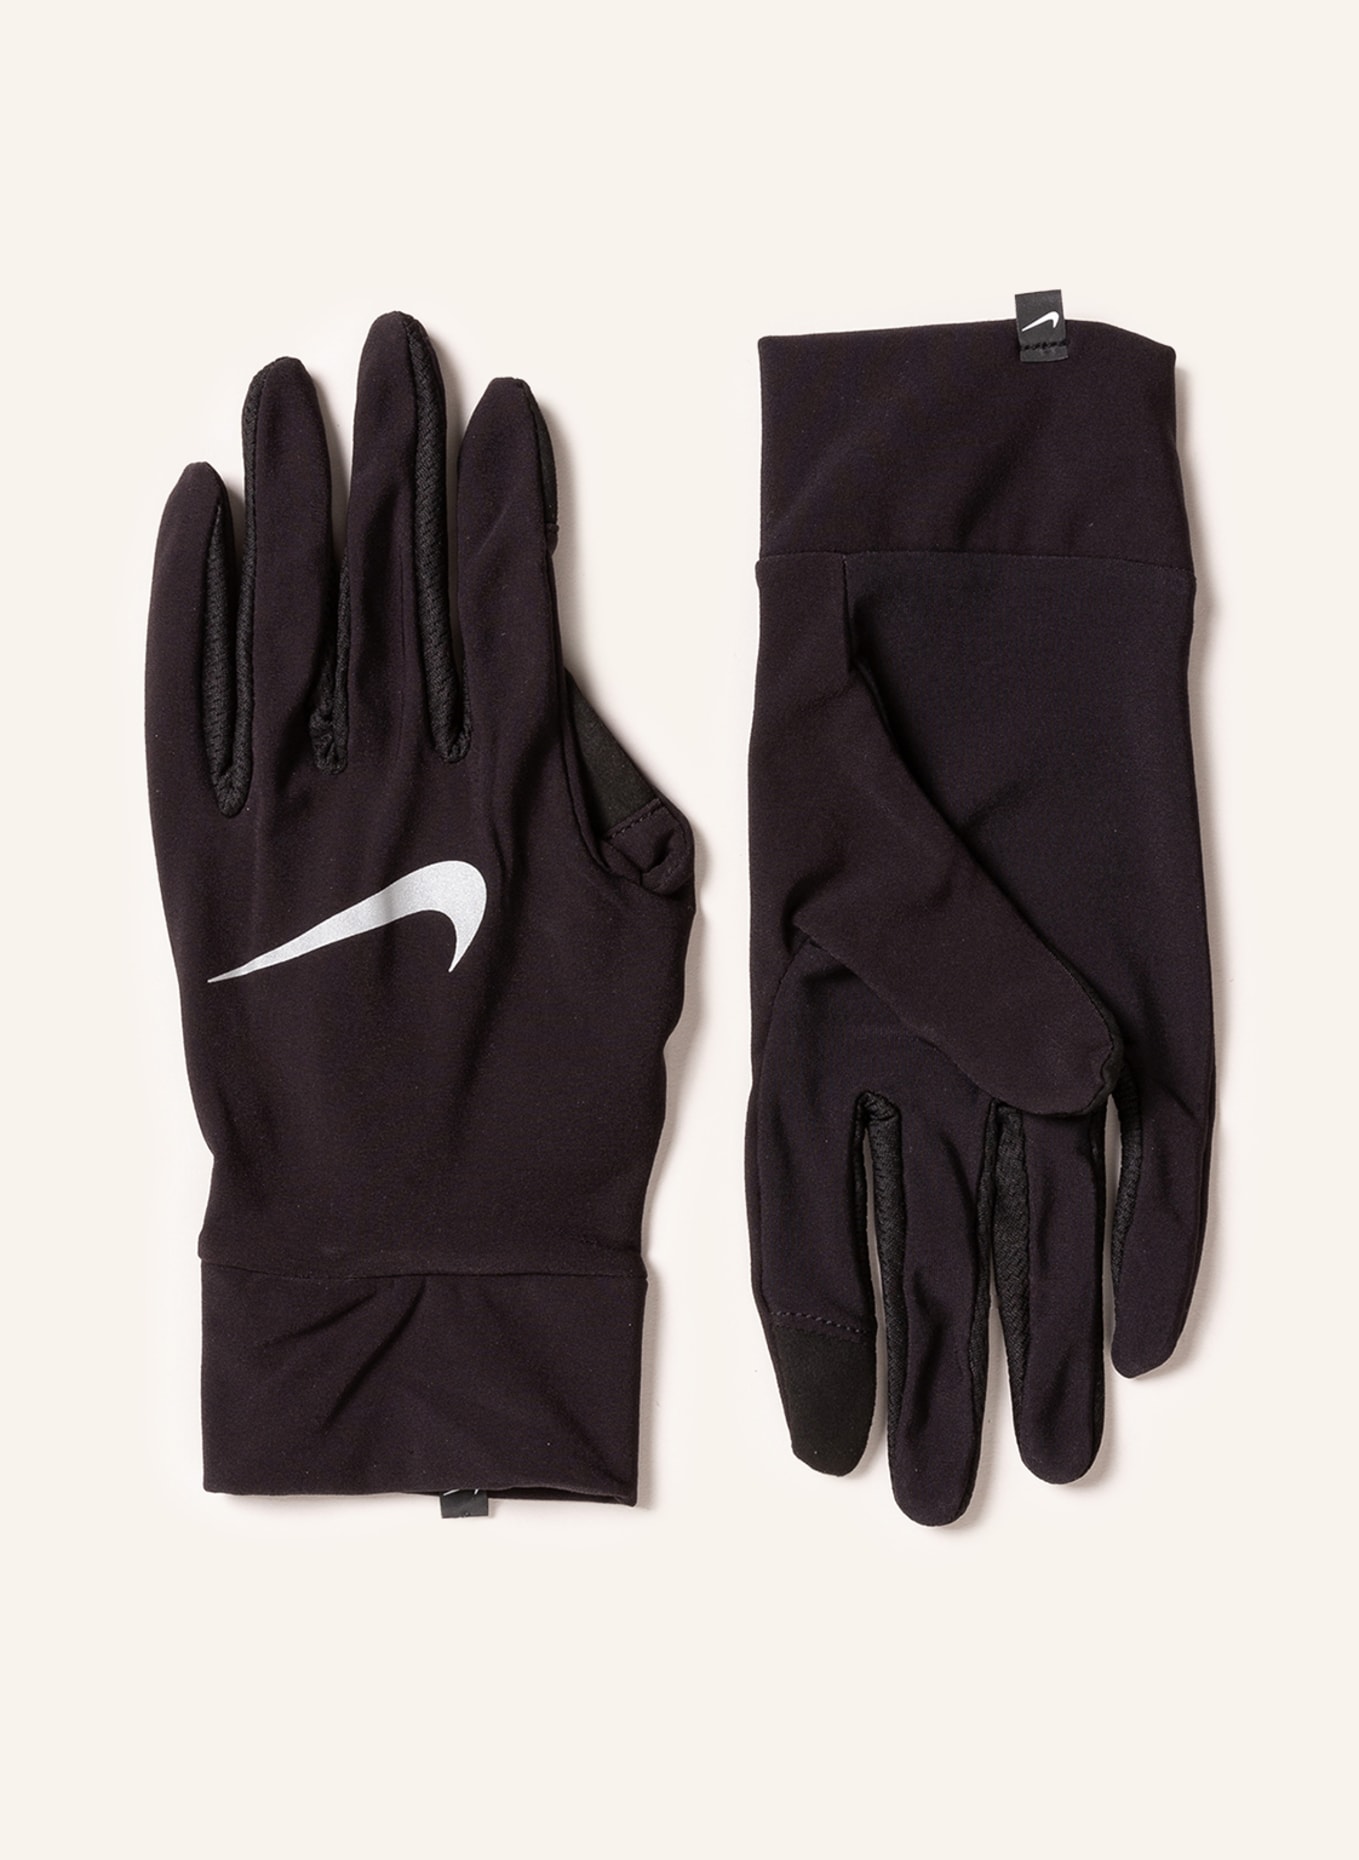 Nike Multisport-Handschuhe LIGHTWEIGHT TECH RUNNING mit Touchscreen-Funktion, Farbe: SCHWARZ/ SILBER (Bild 1)